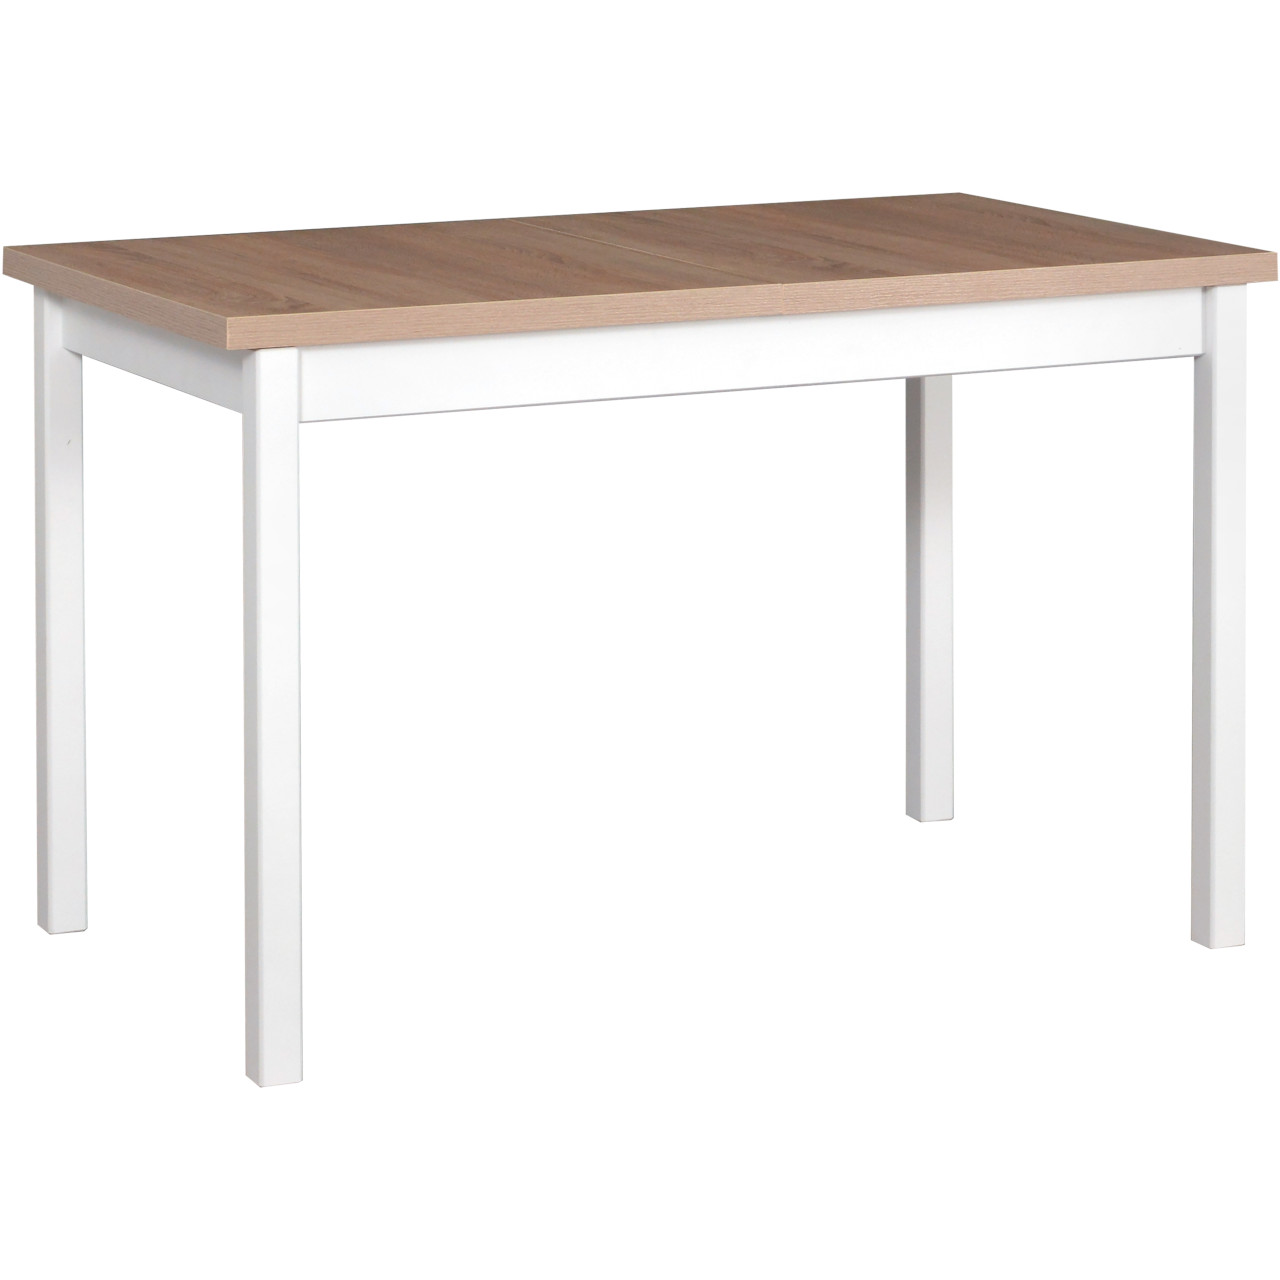 Table MAX 10 70x120/160 sonoma laminate / white